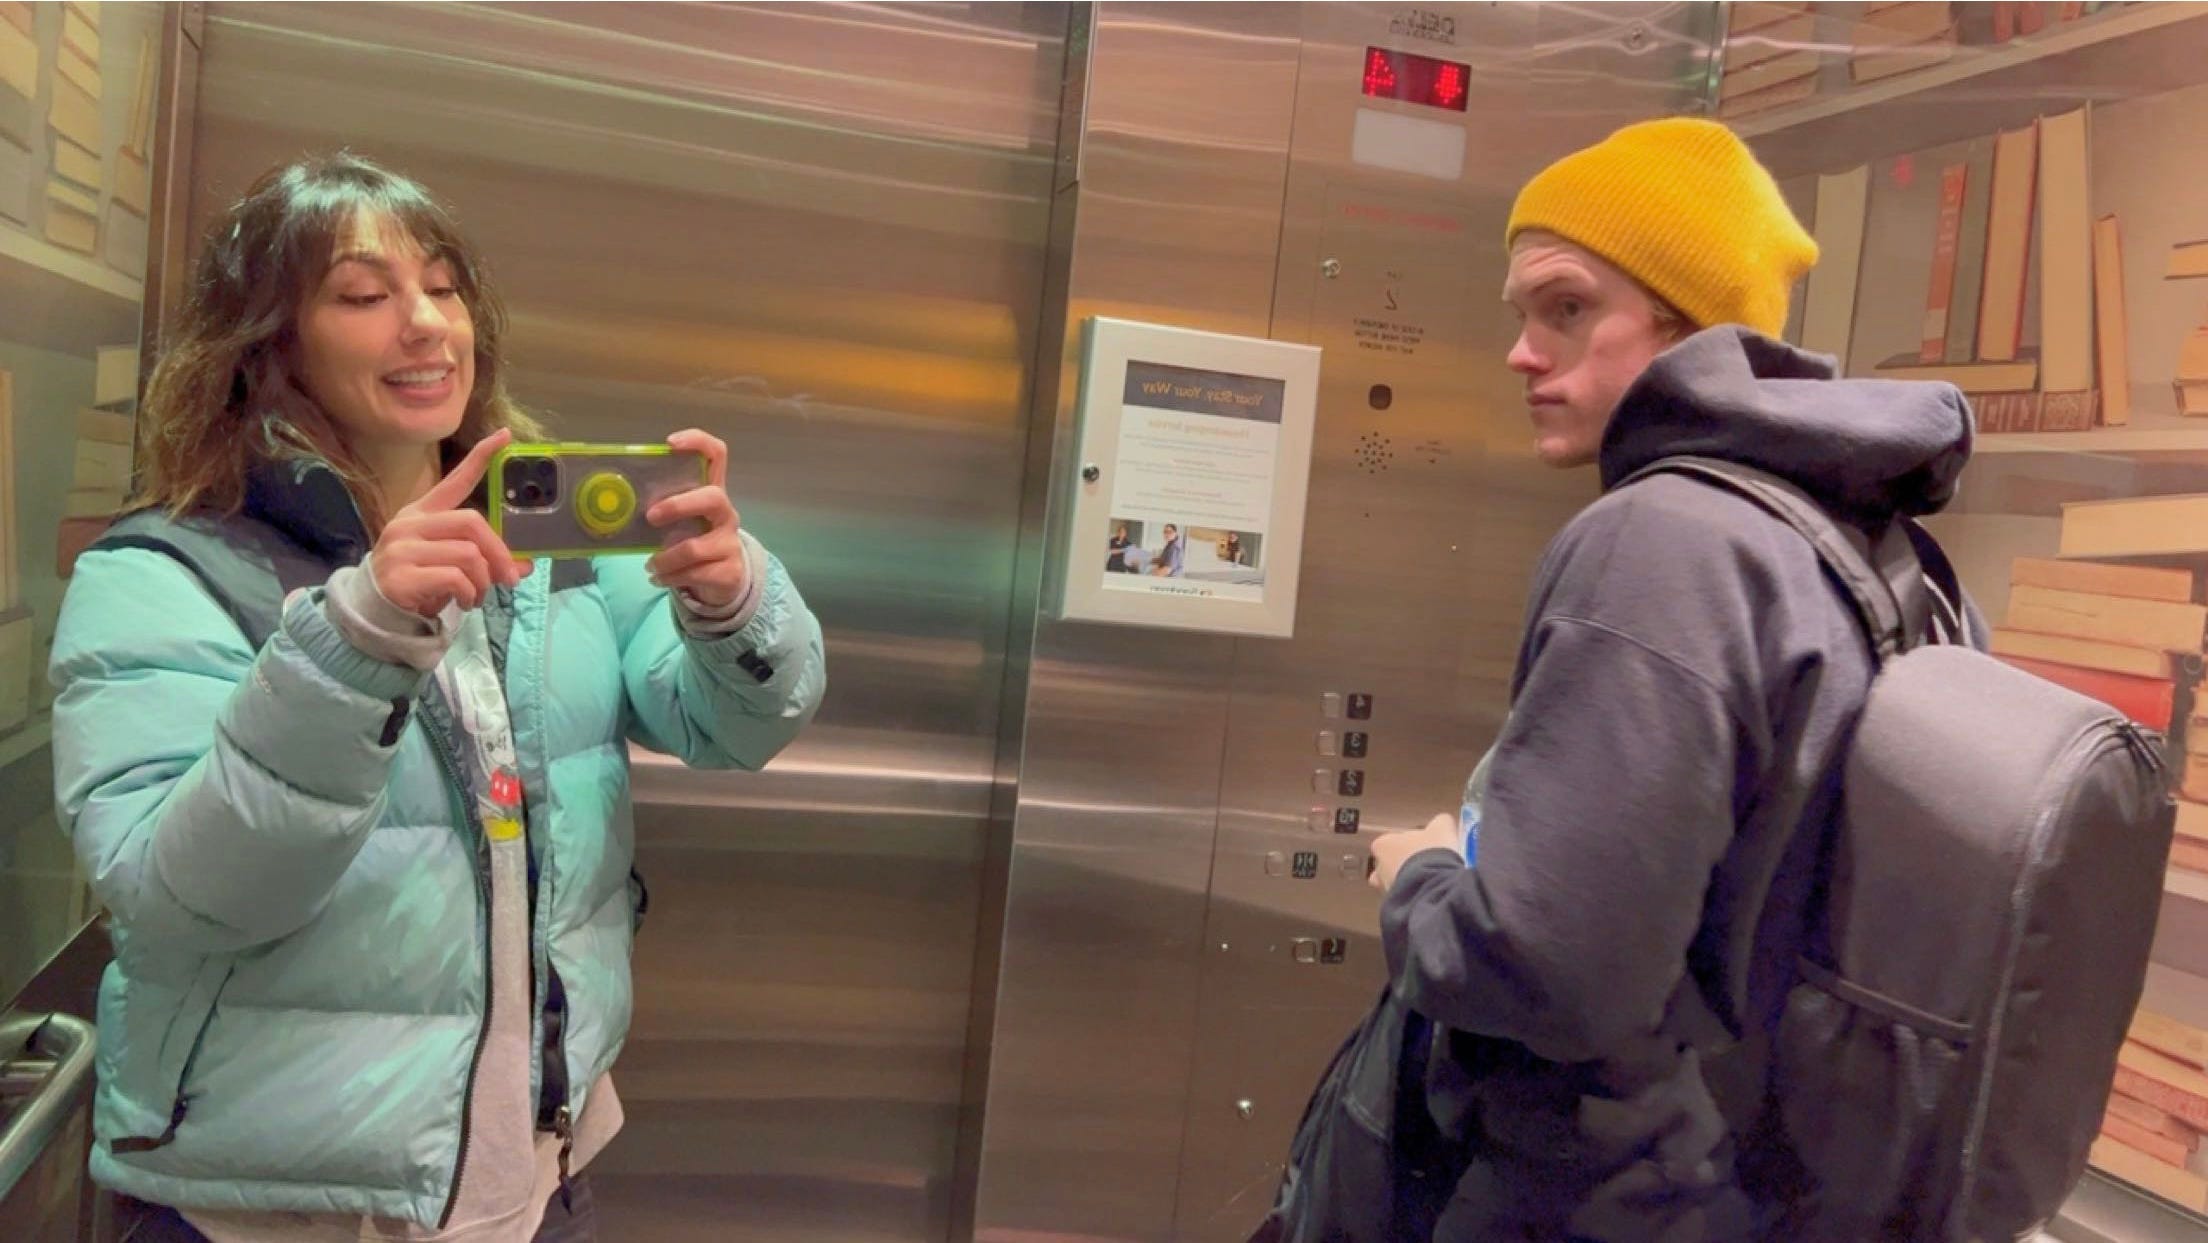 andrea valdez taking an elevator mirror selfie with brandon wells